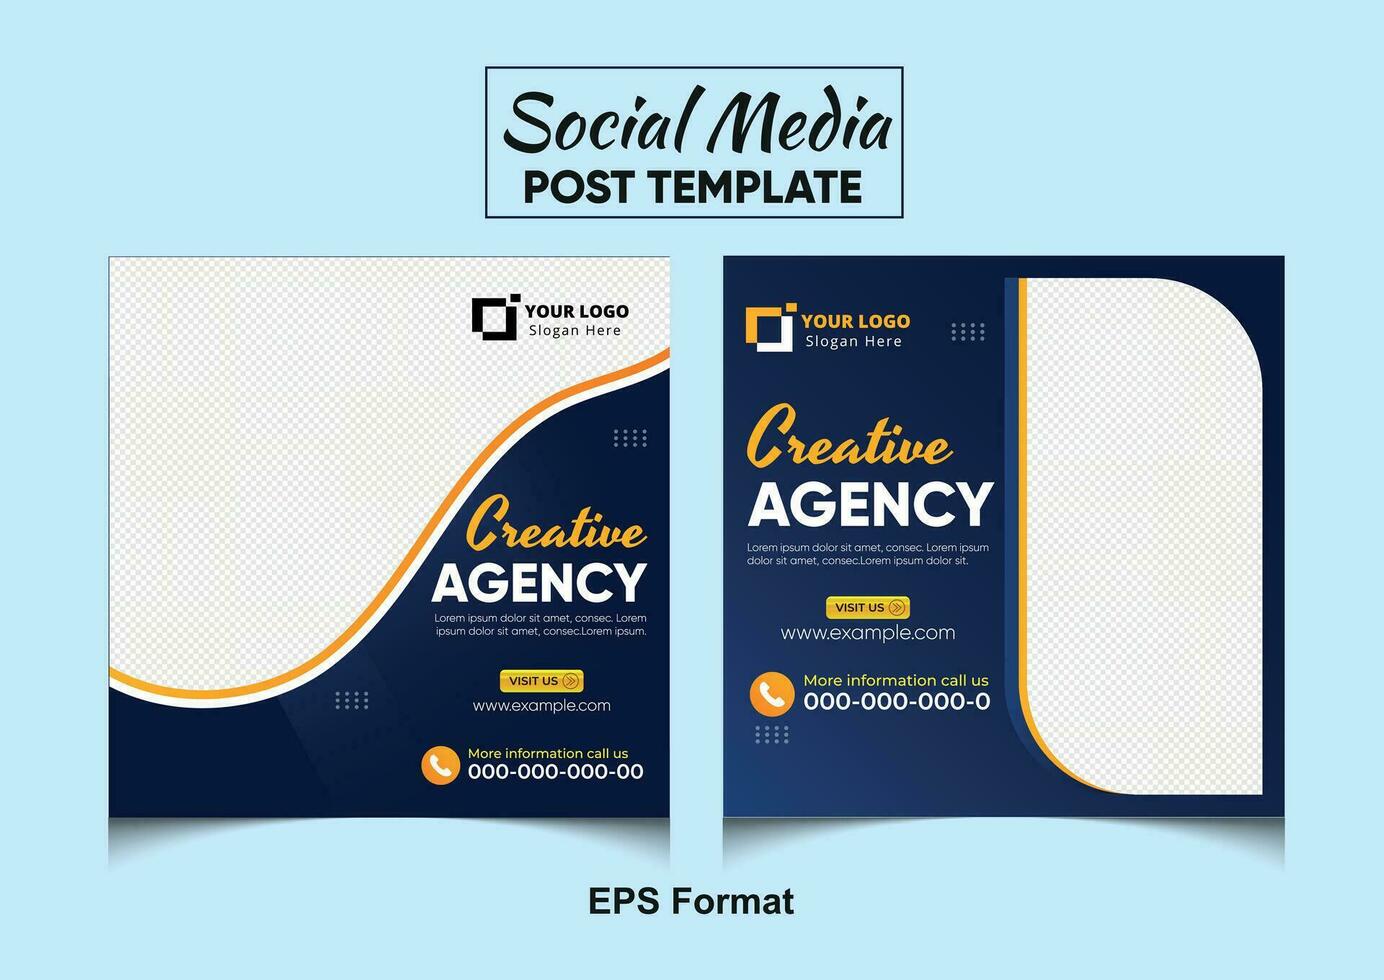 Digital Marketing Agency Social Media Post Set, Corporate Business Promotion Online Webinar Social Media Web Banner, Square Flyer Design Template vector